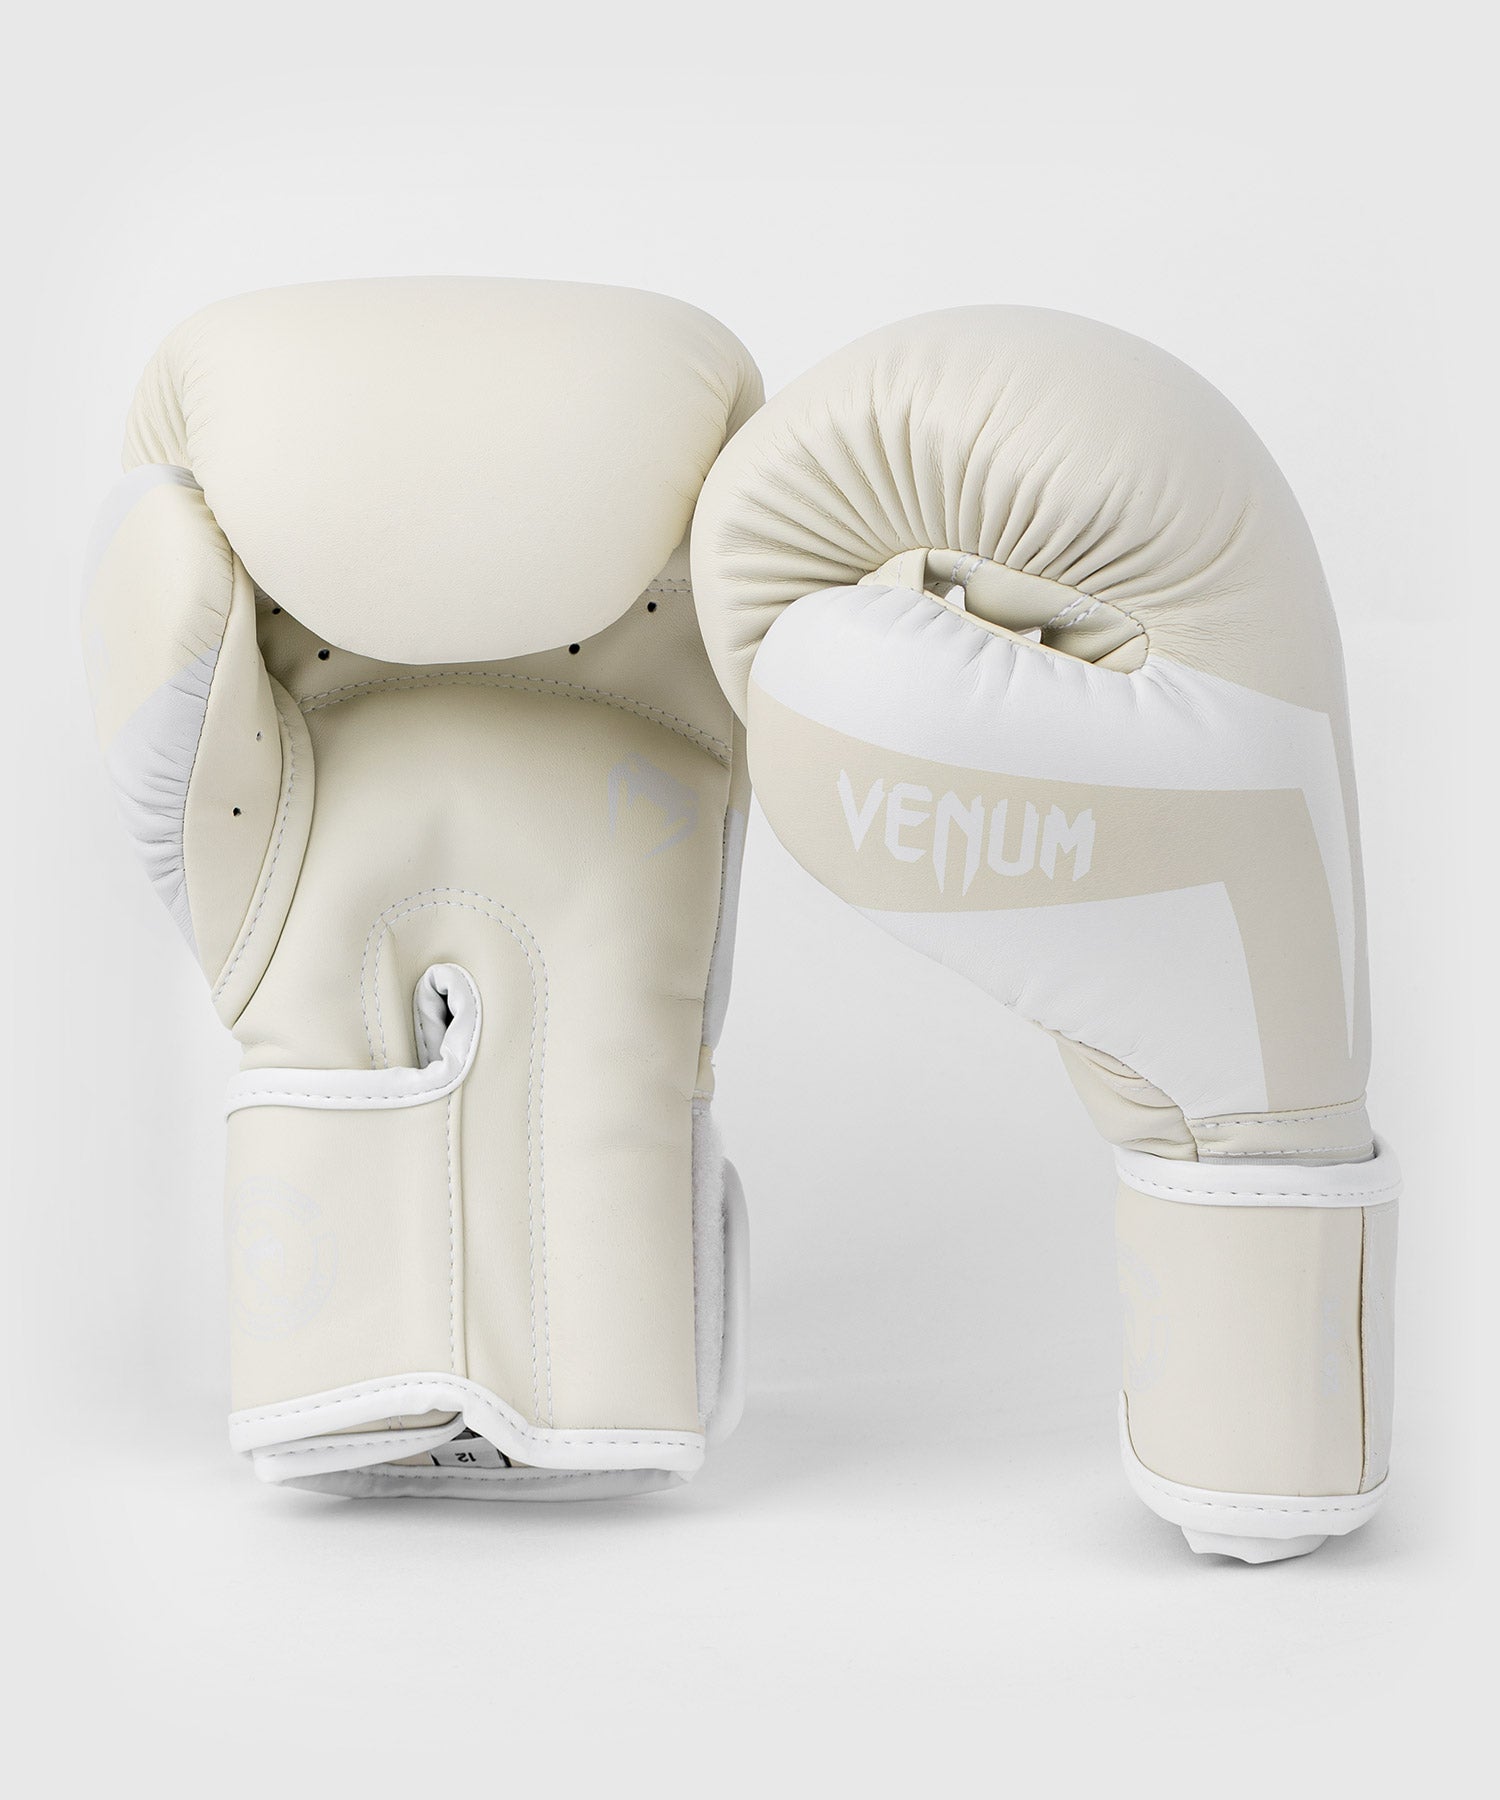 Gants de Boxe Venum Elite Evo - Kaki/Argent - The Fight Club